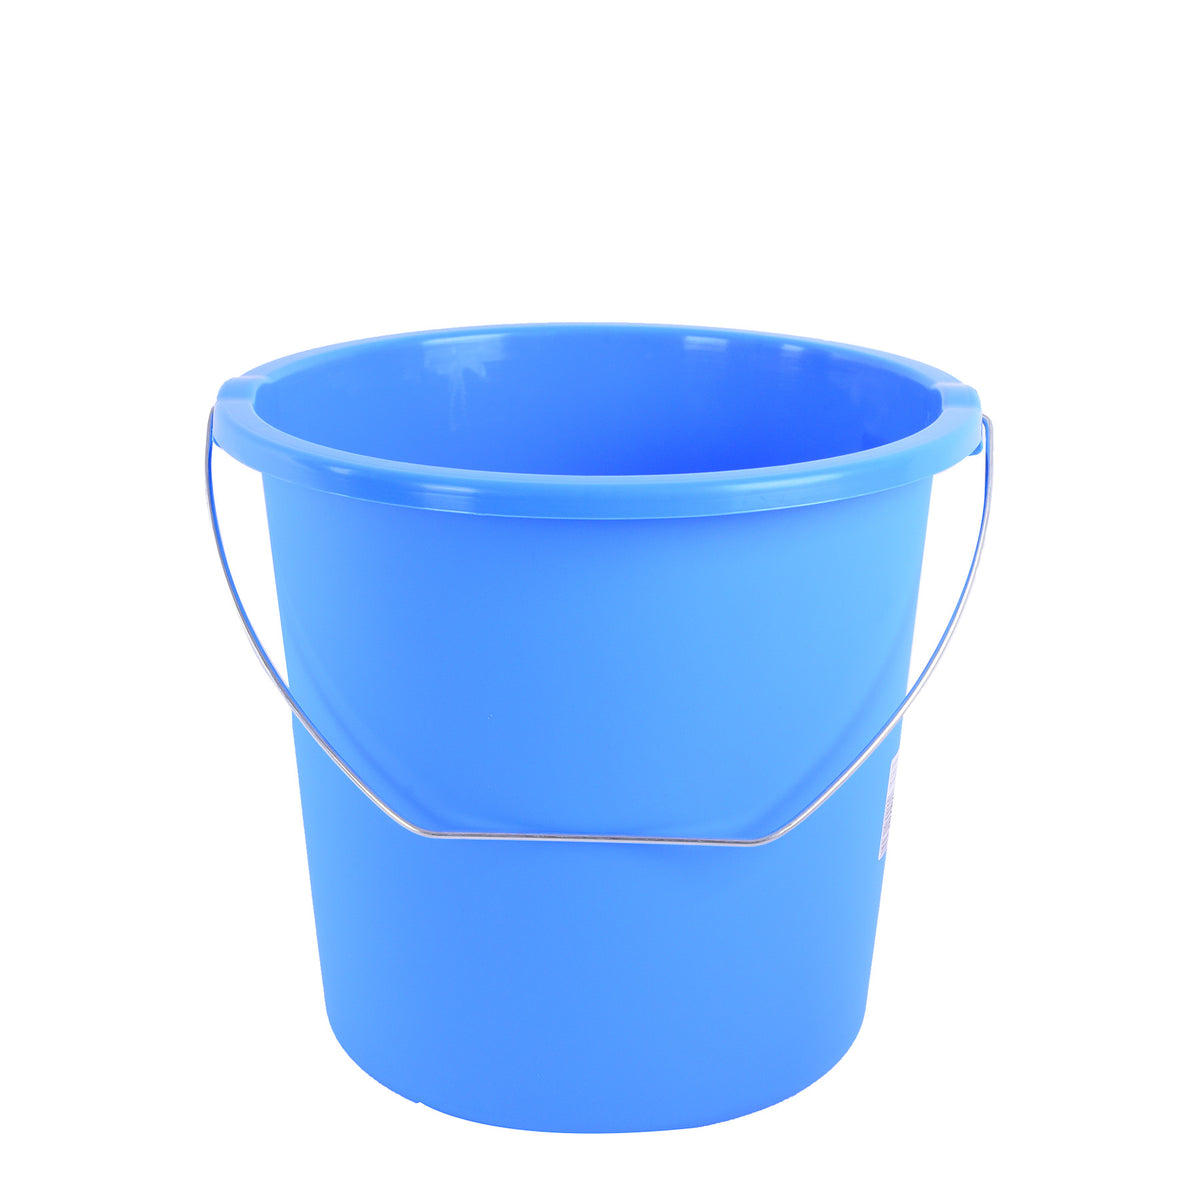 Bucket with metal handle Size: 28.8 x H26 cm